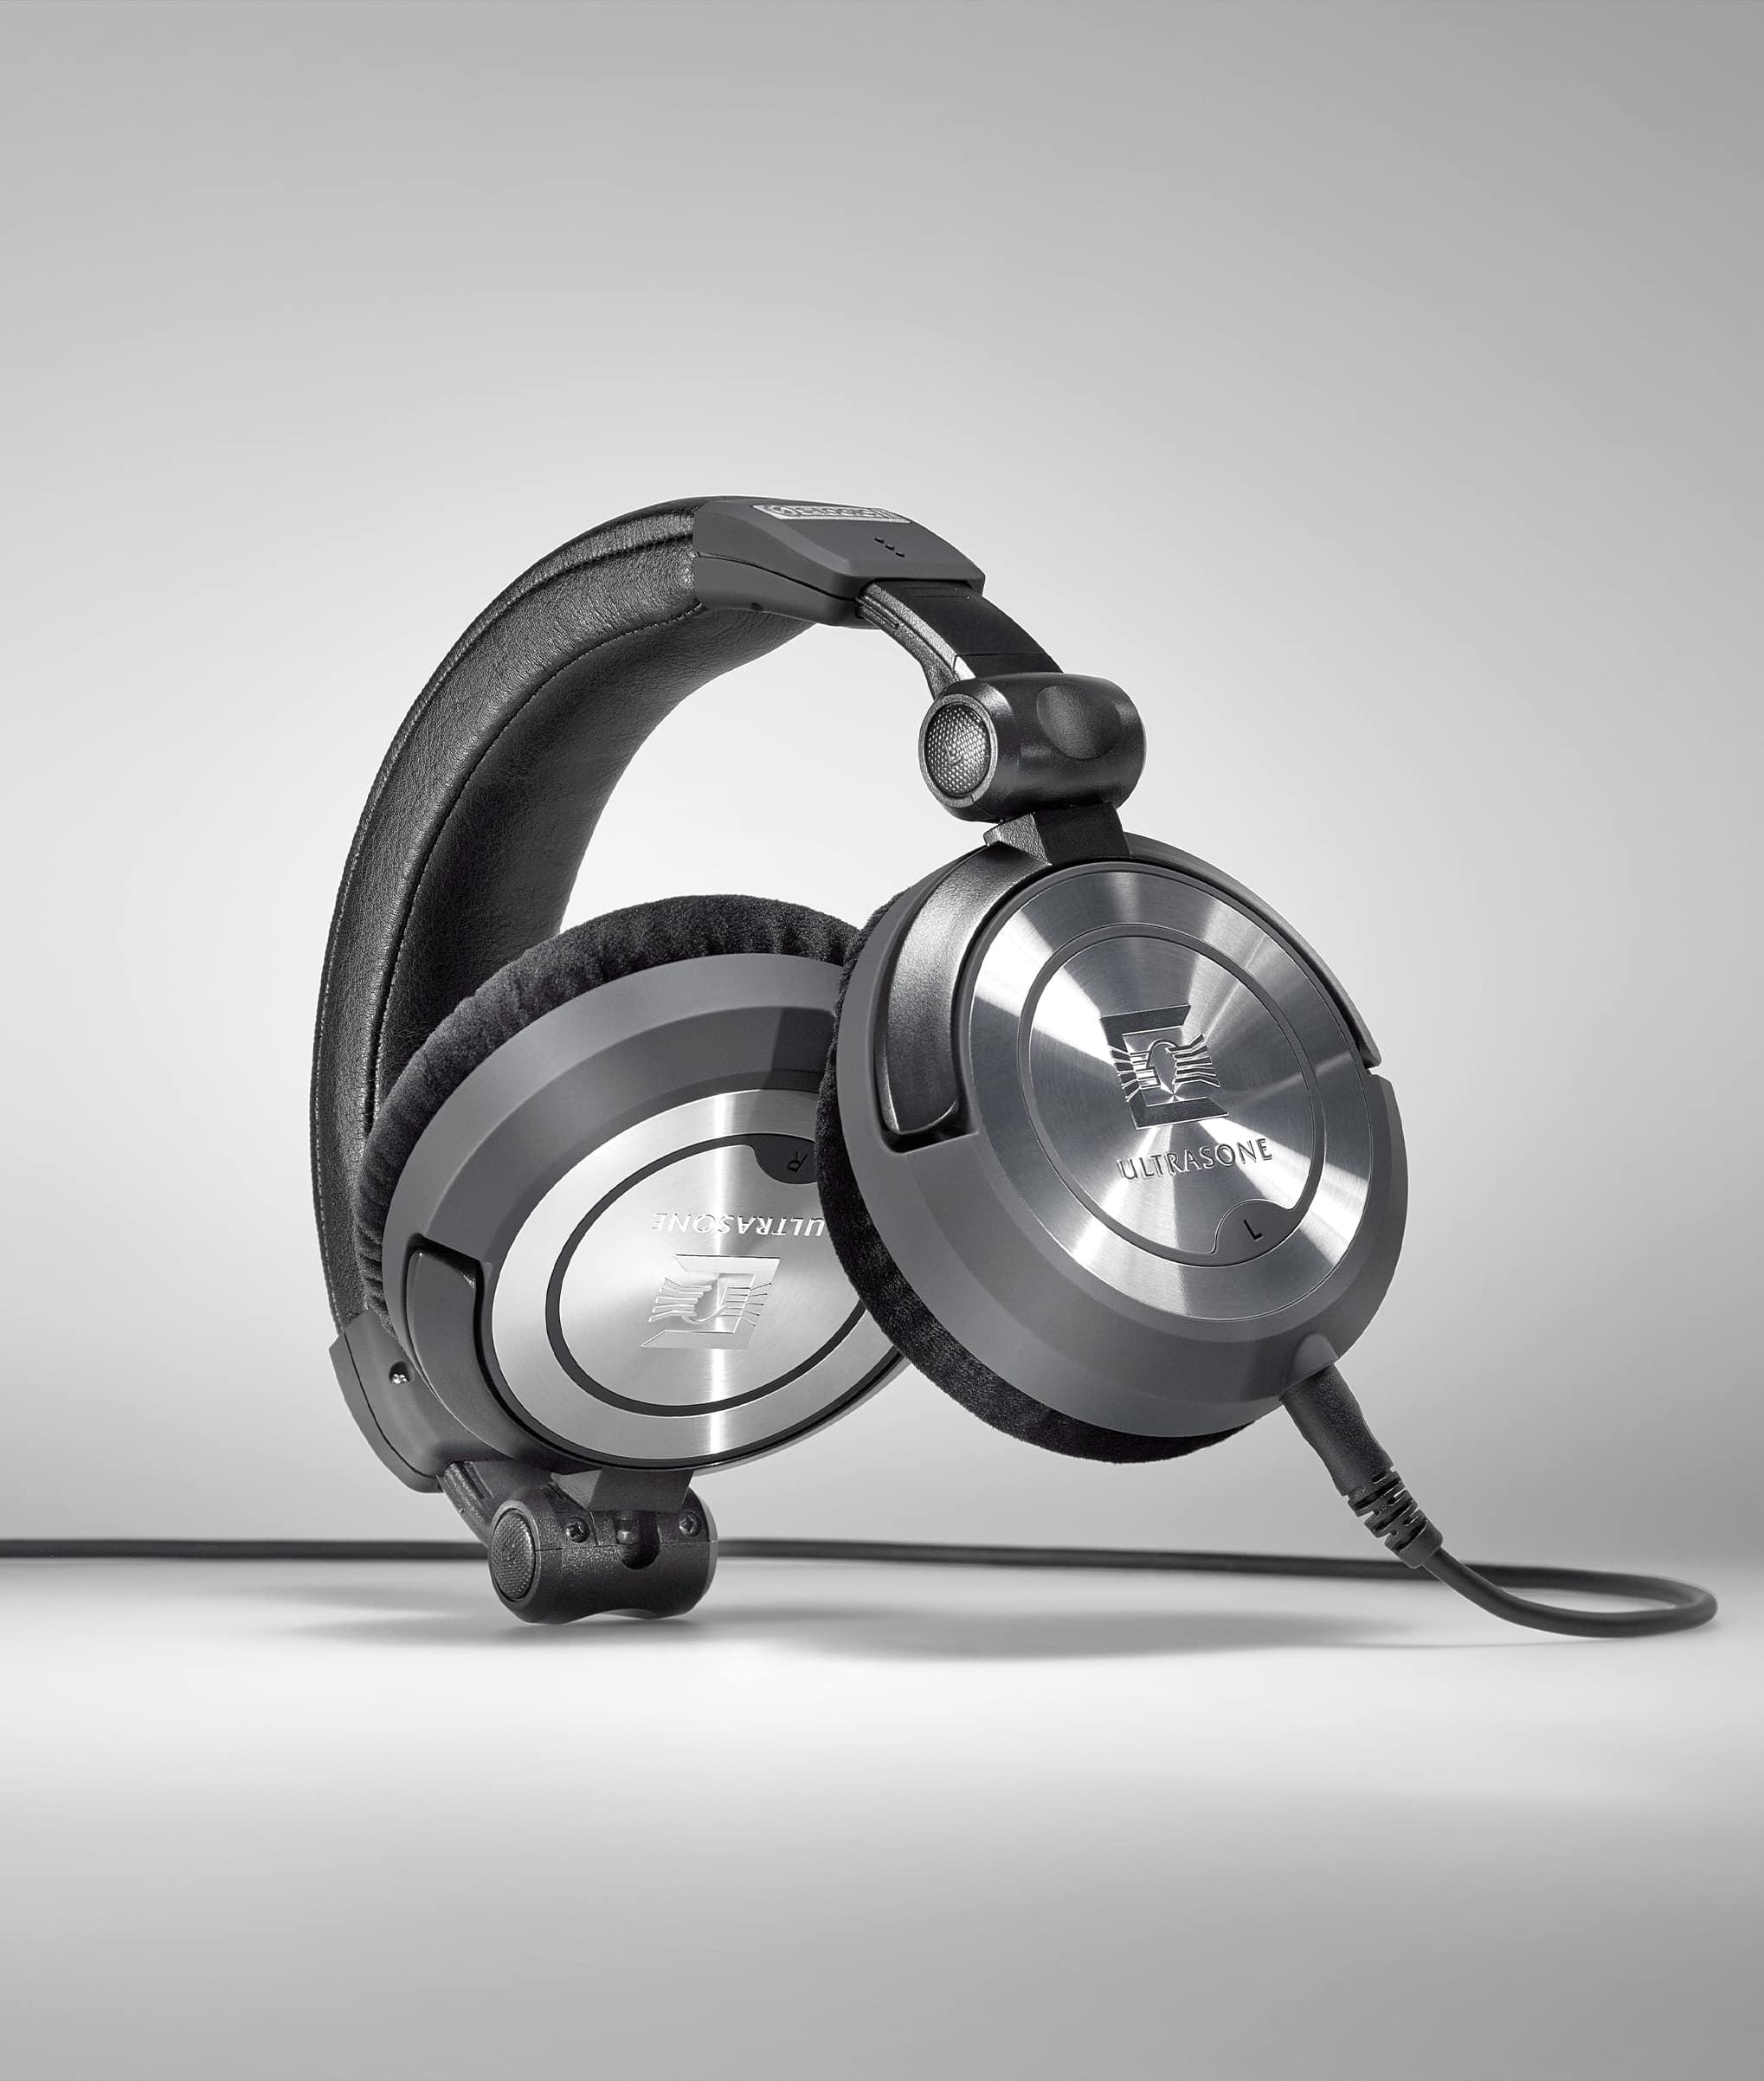 Ultrasone PRO 900i Headphones